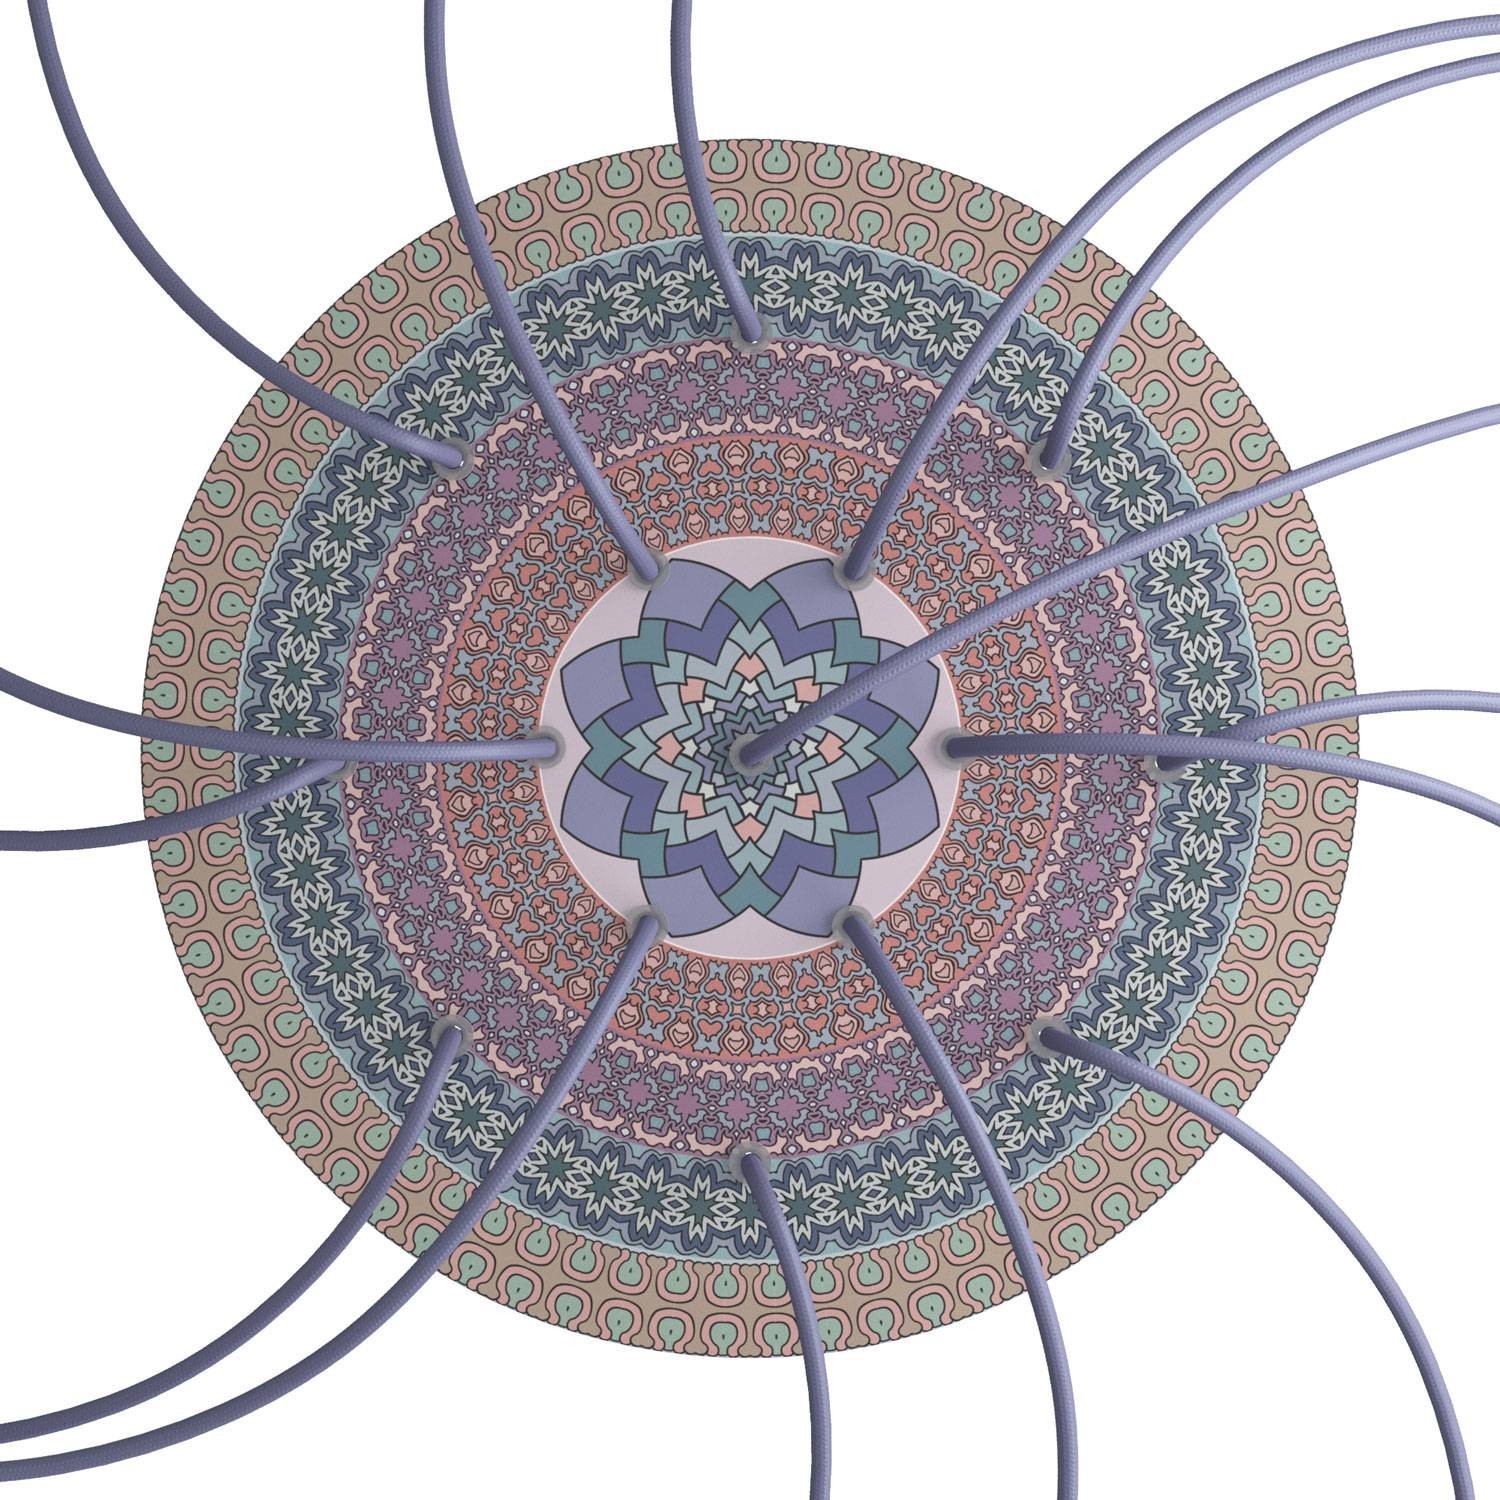 Velika okrugla dekoracija za stropnu rozetu 400 mm - Rose-One sistem s 15 rupa i 4 bočne rupe - PROMO